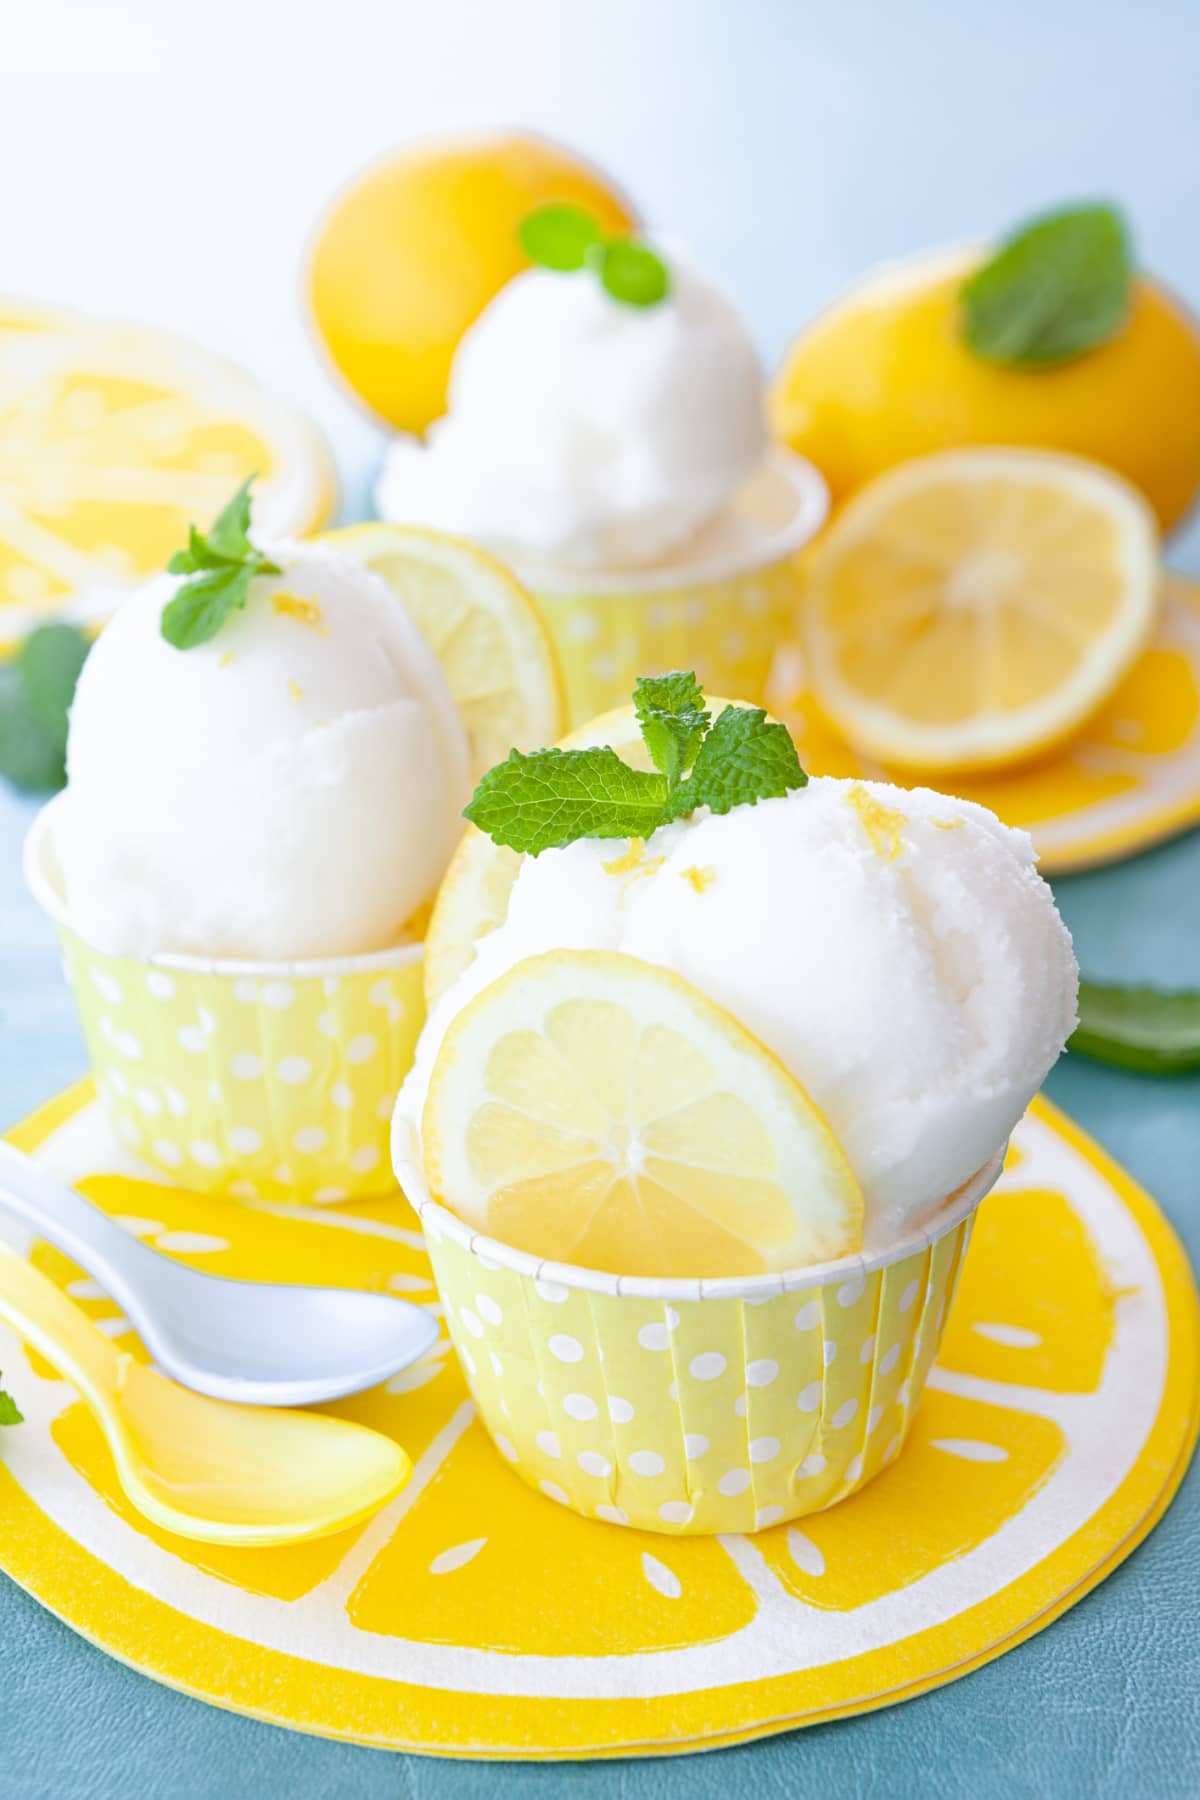 Lemon sorbet with lemon slices and mint leaves